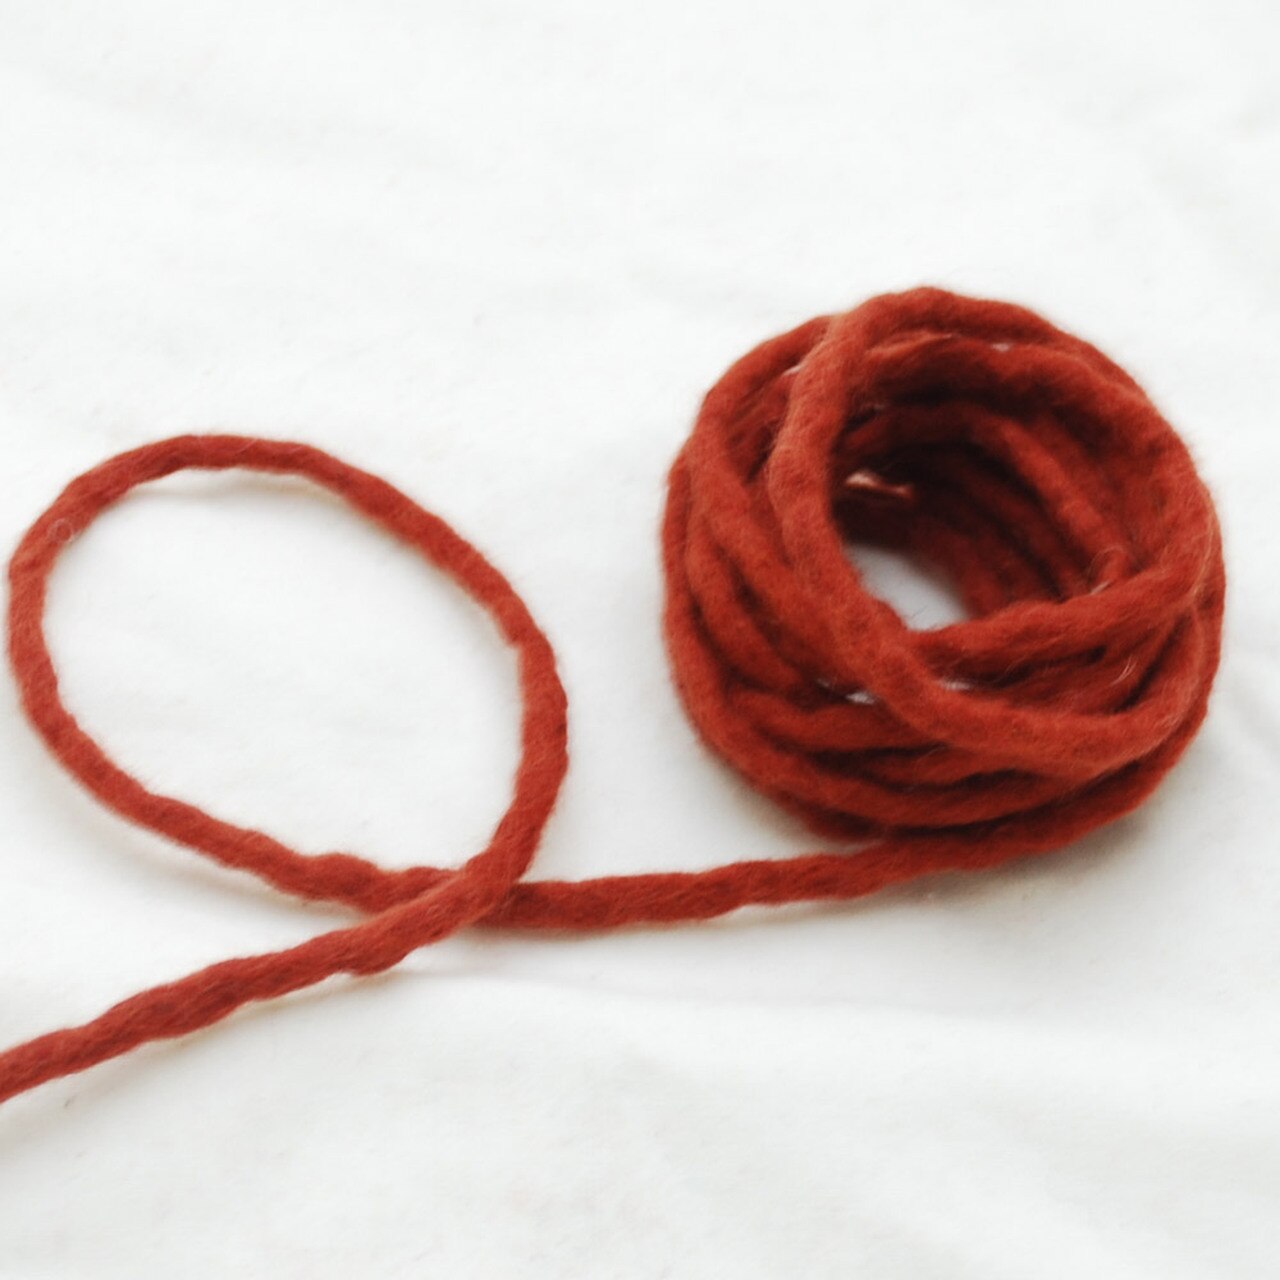 Handmade 100% Wool Felt Cord - Dark Chestnut Red